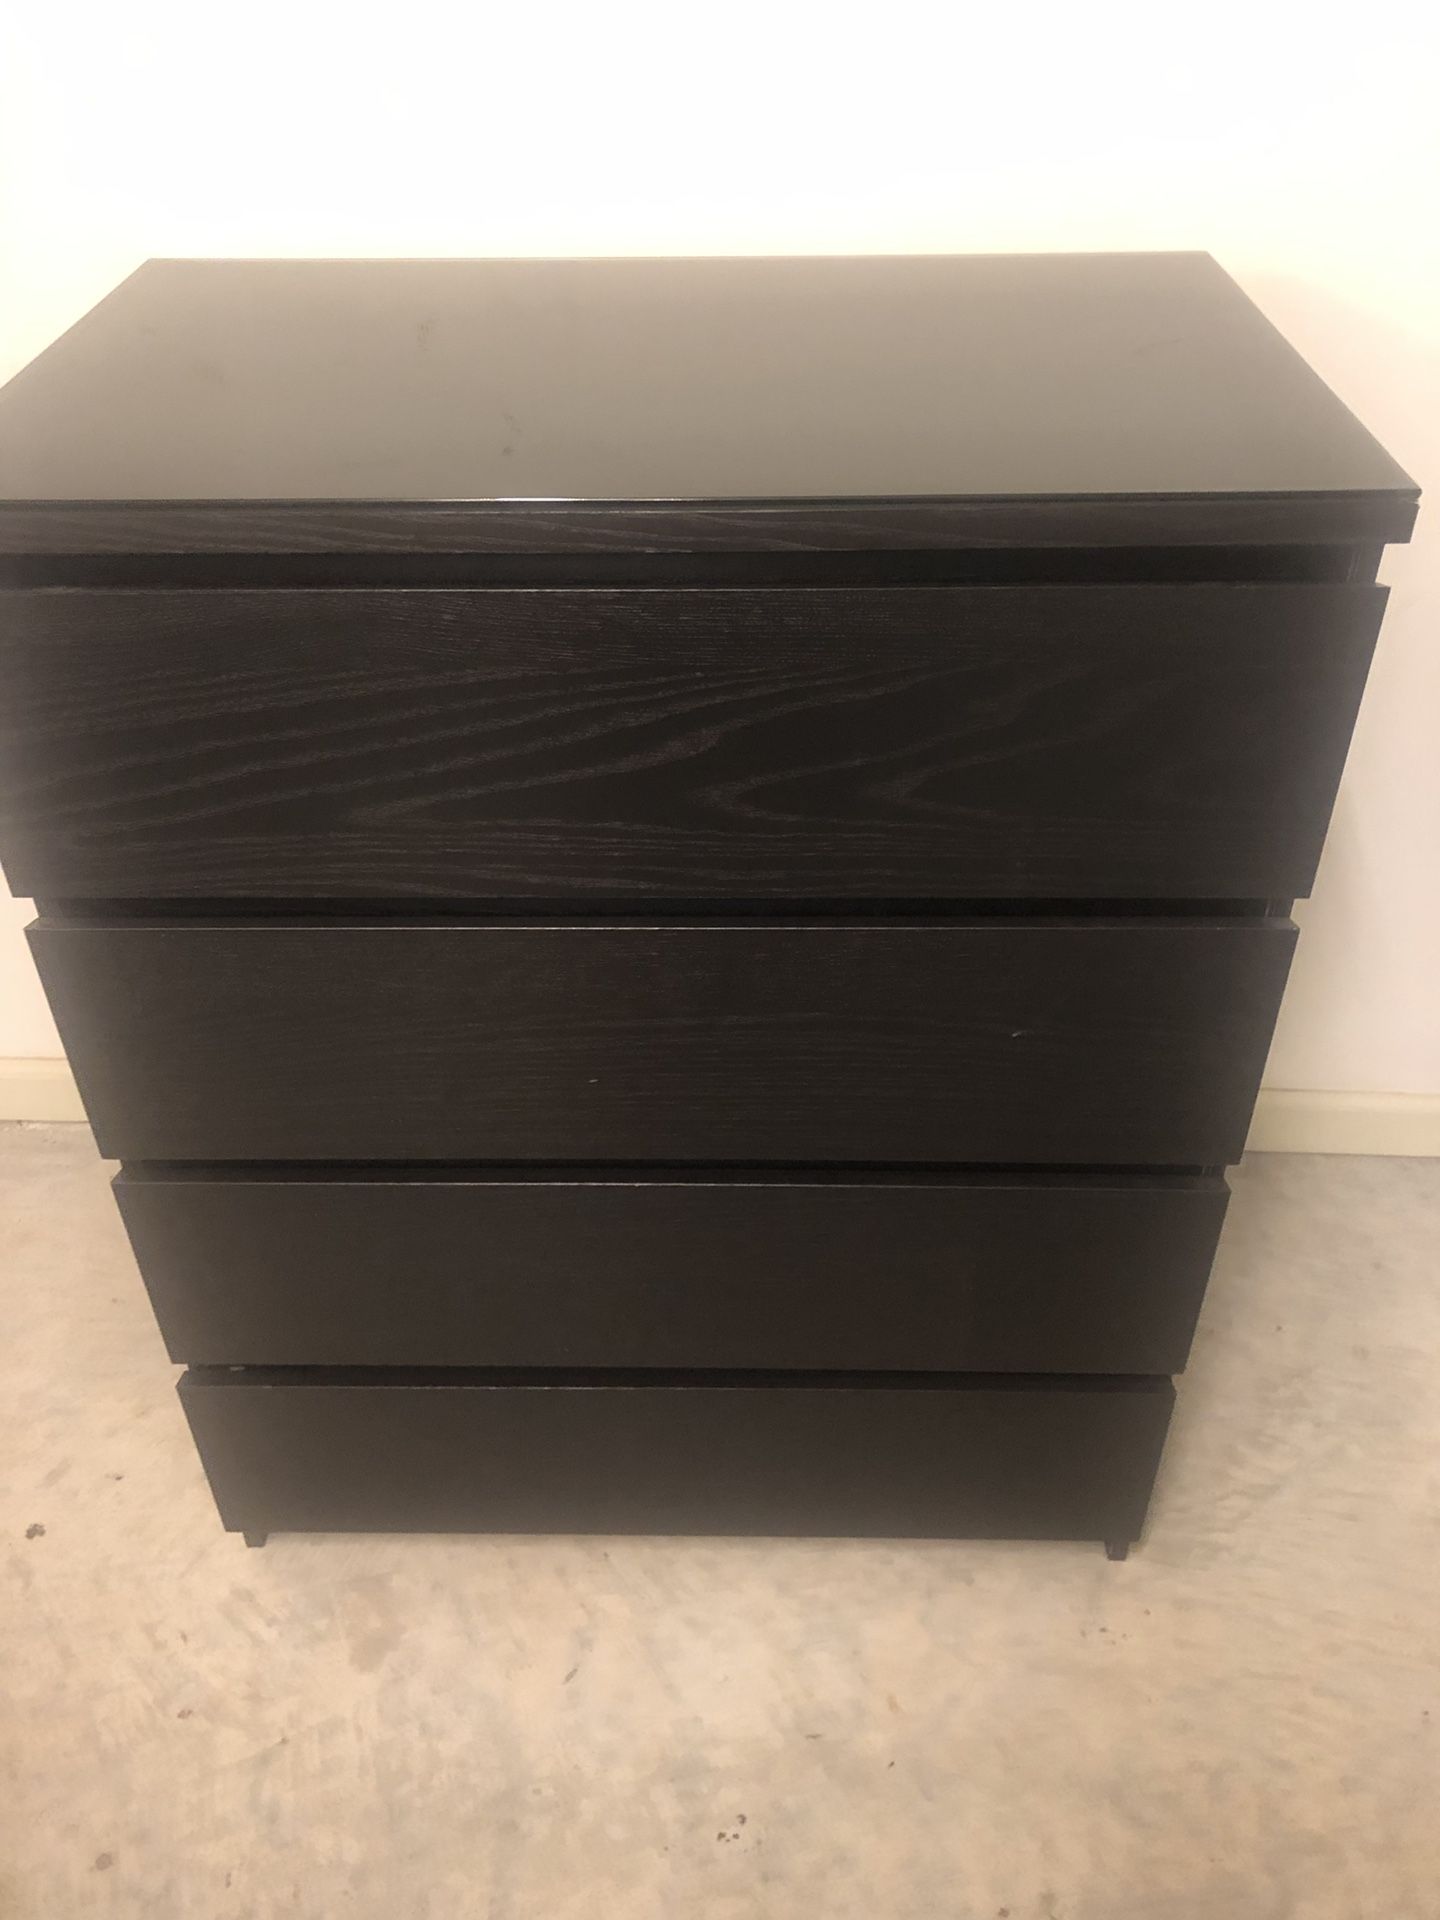 IKEA Malm Brown/Black 4 draw dresser